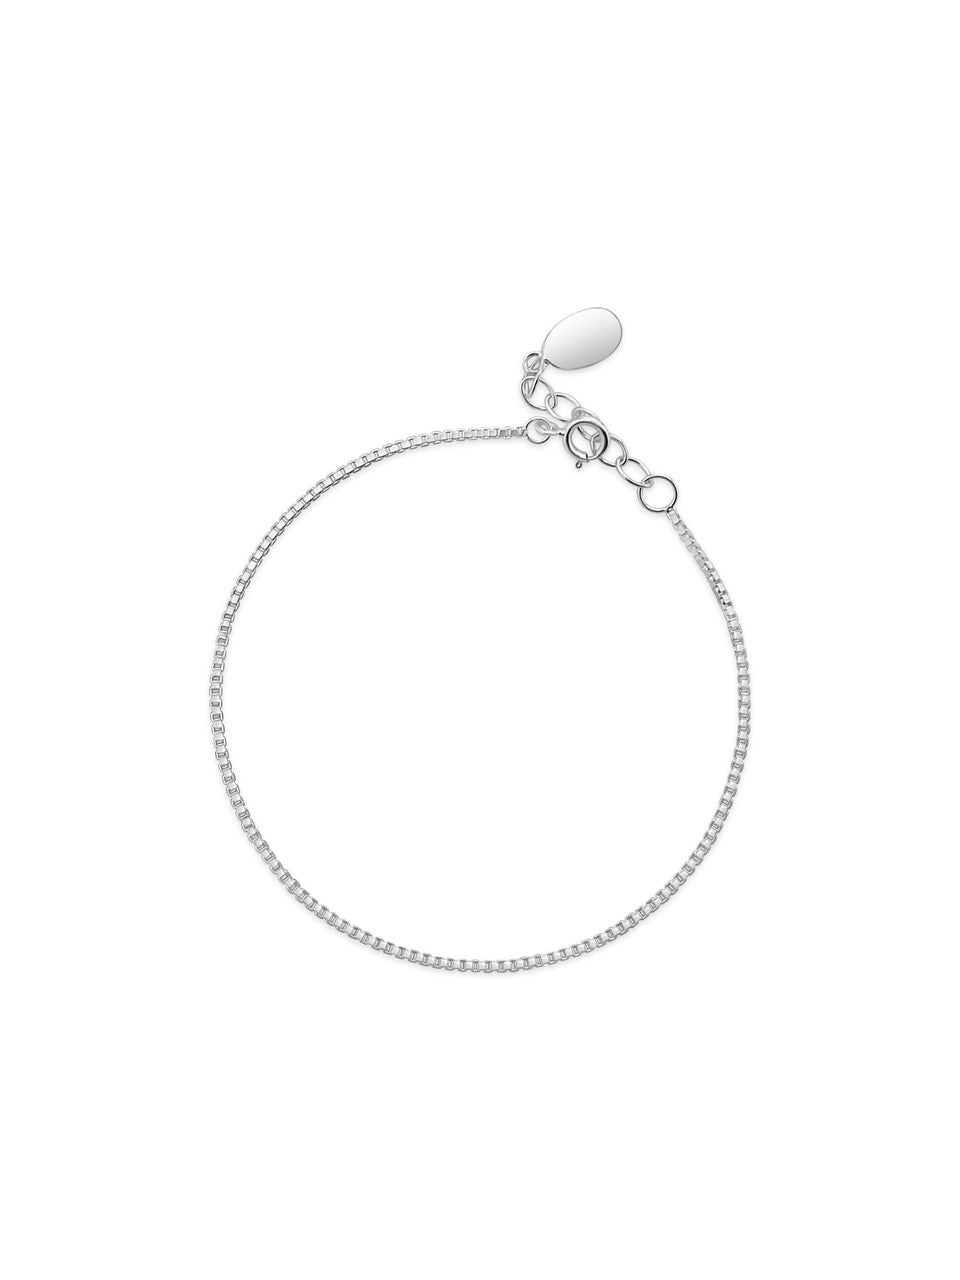 Ichu Box Silver Bracelet - JP13402 | Ice Jewellery Australia